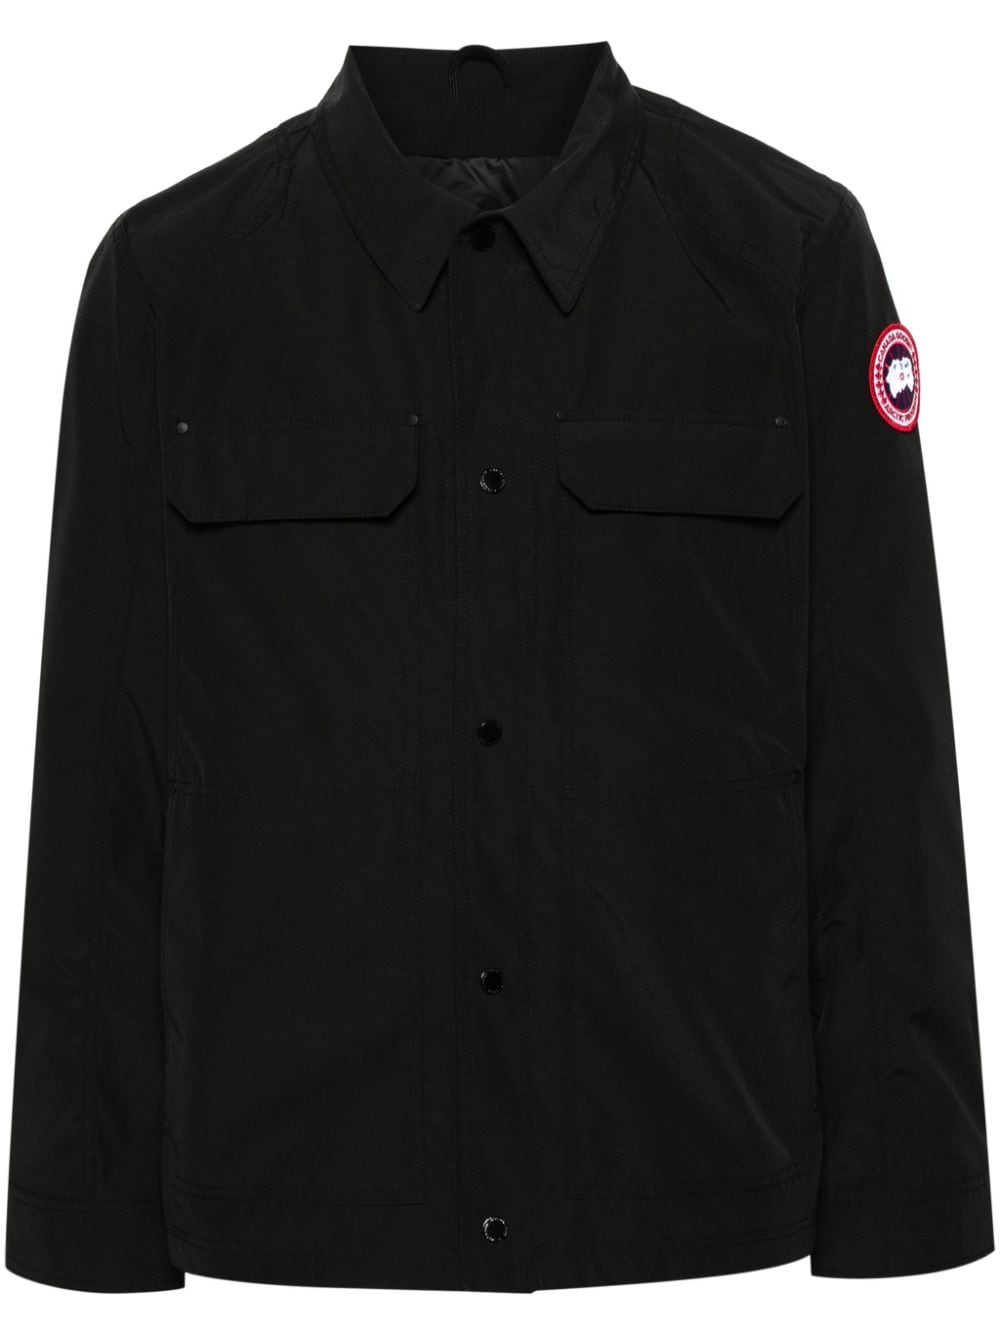 Canada Goose Classic Black Jacket For Men